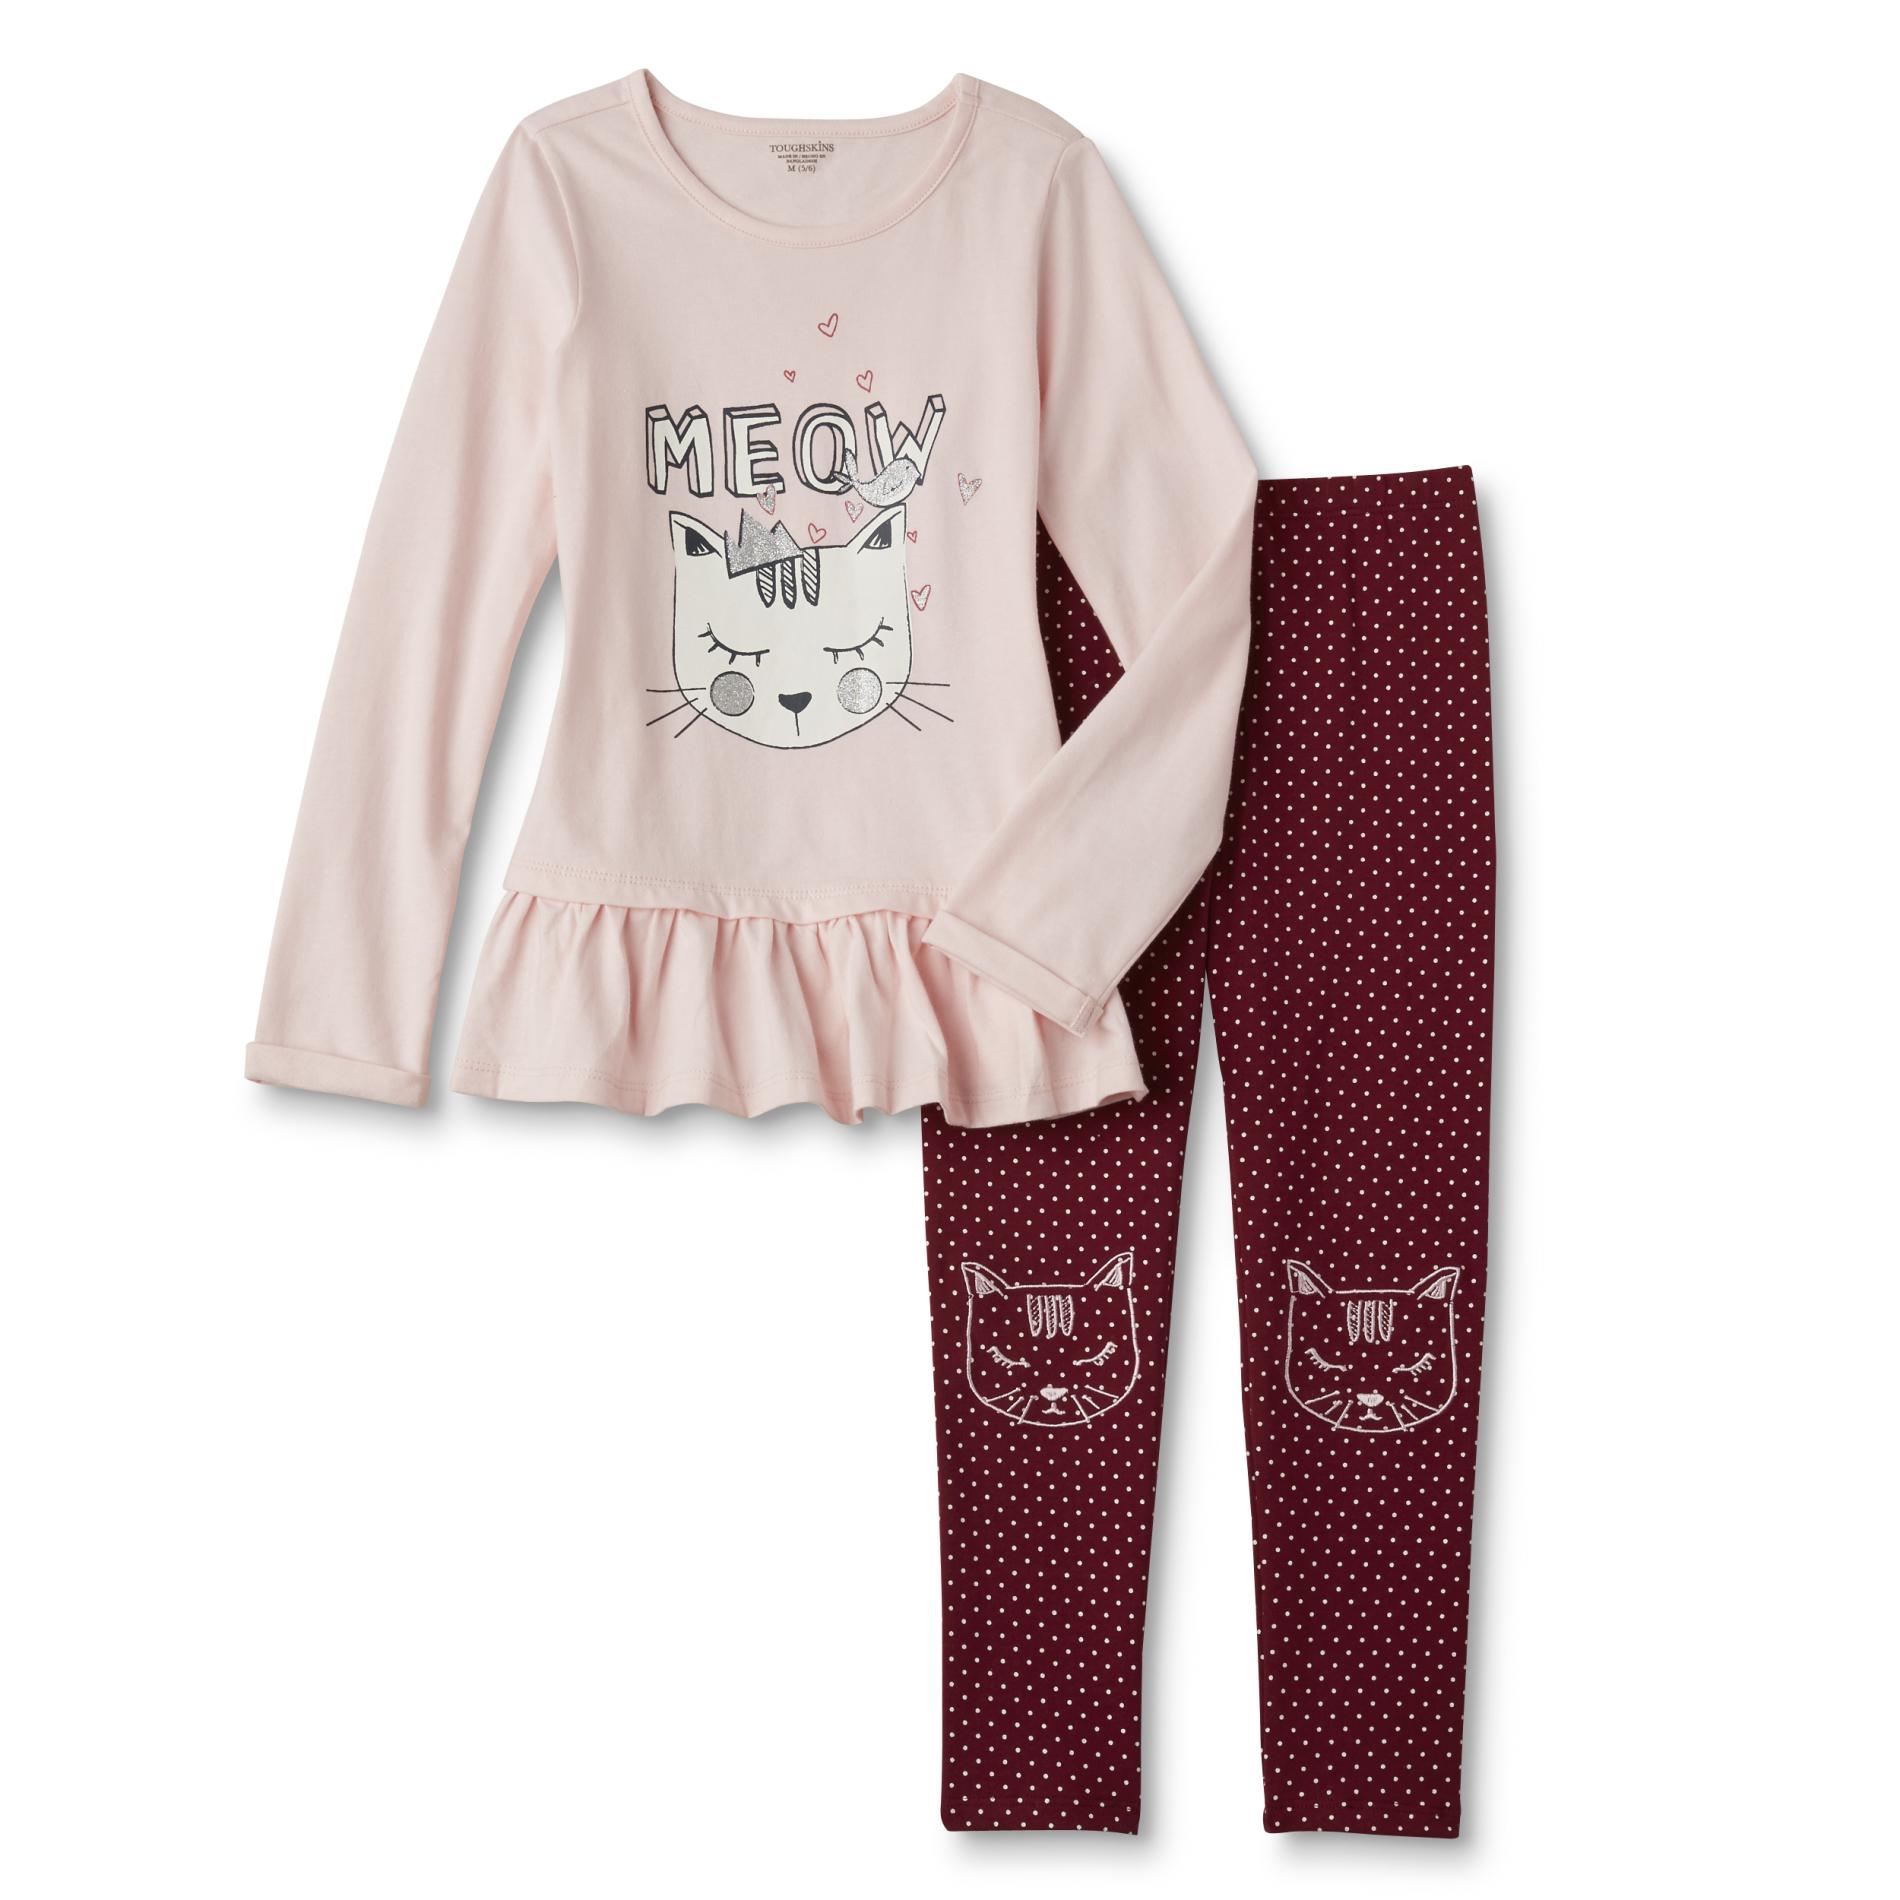 Toughskins Infant & Toddler Girls' Tunic & Leggings - Meow Kitty